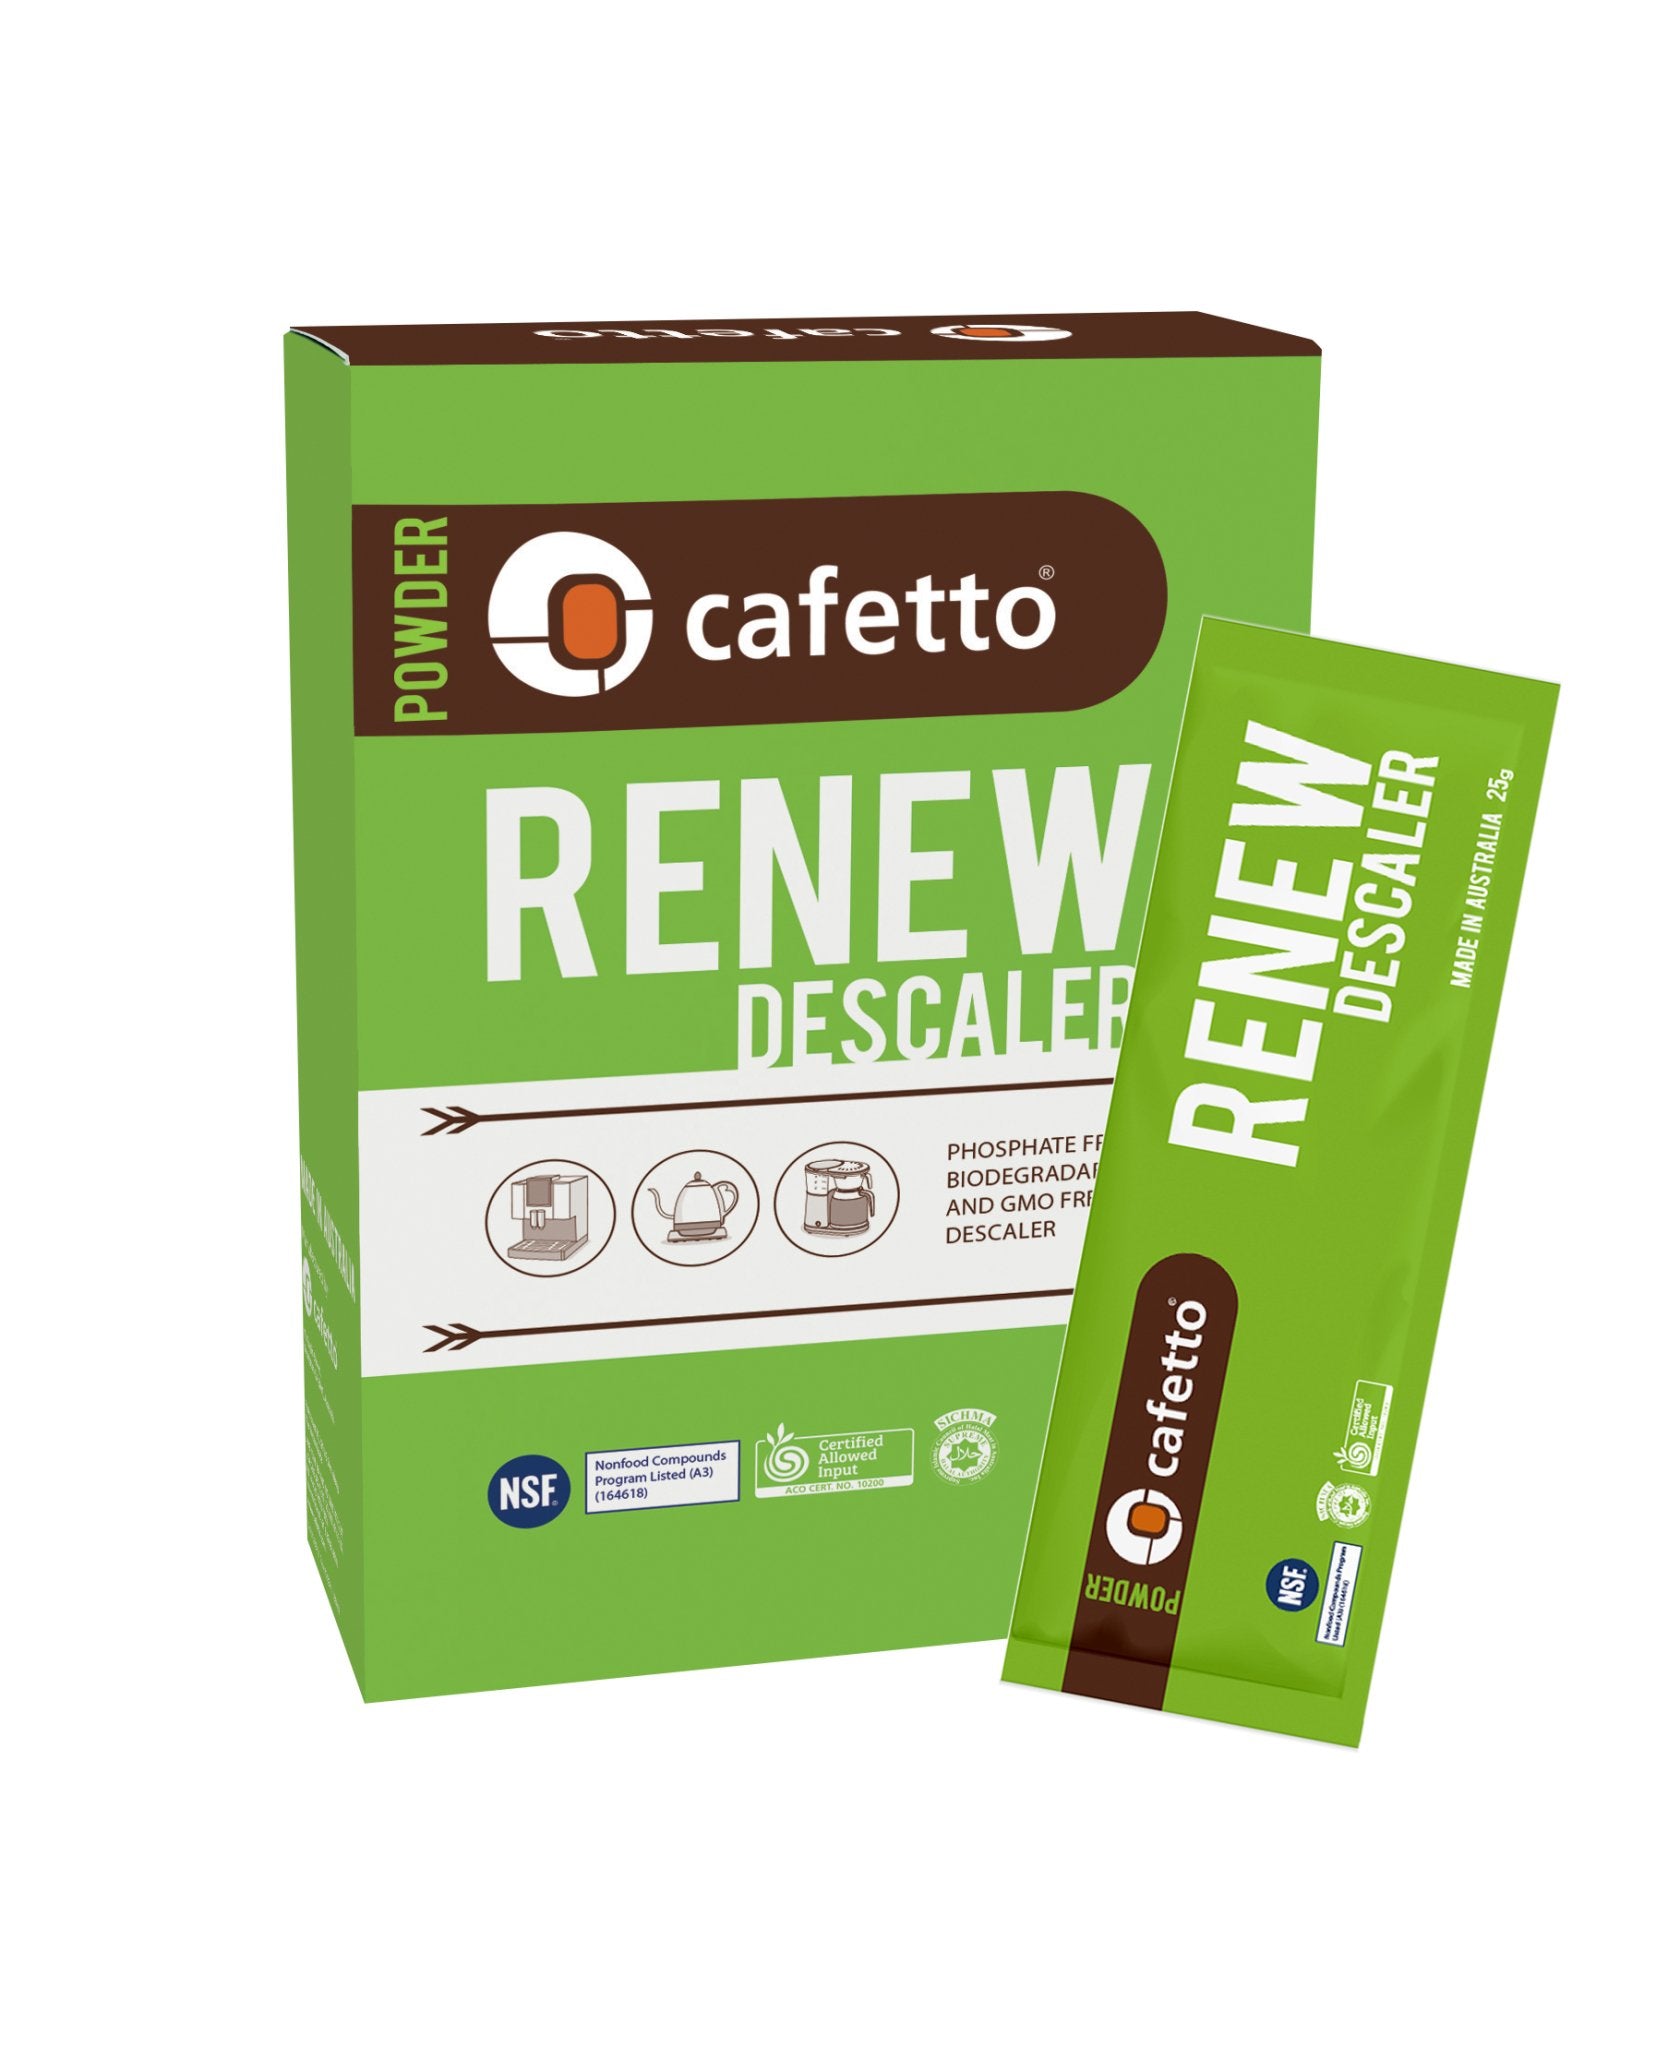 Cafetto - Renew Descaler - Corporate Coffee